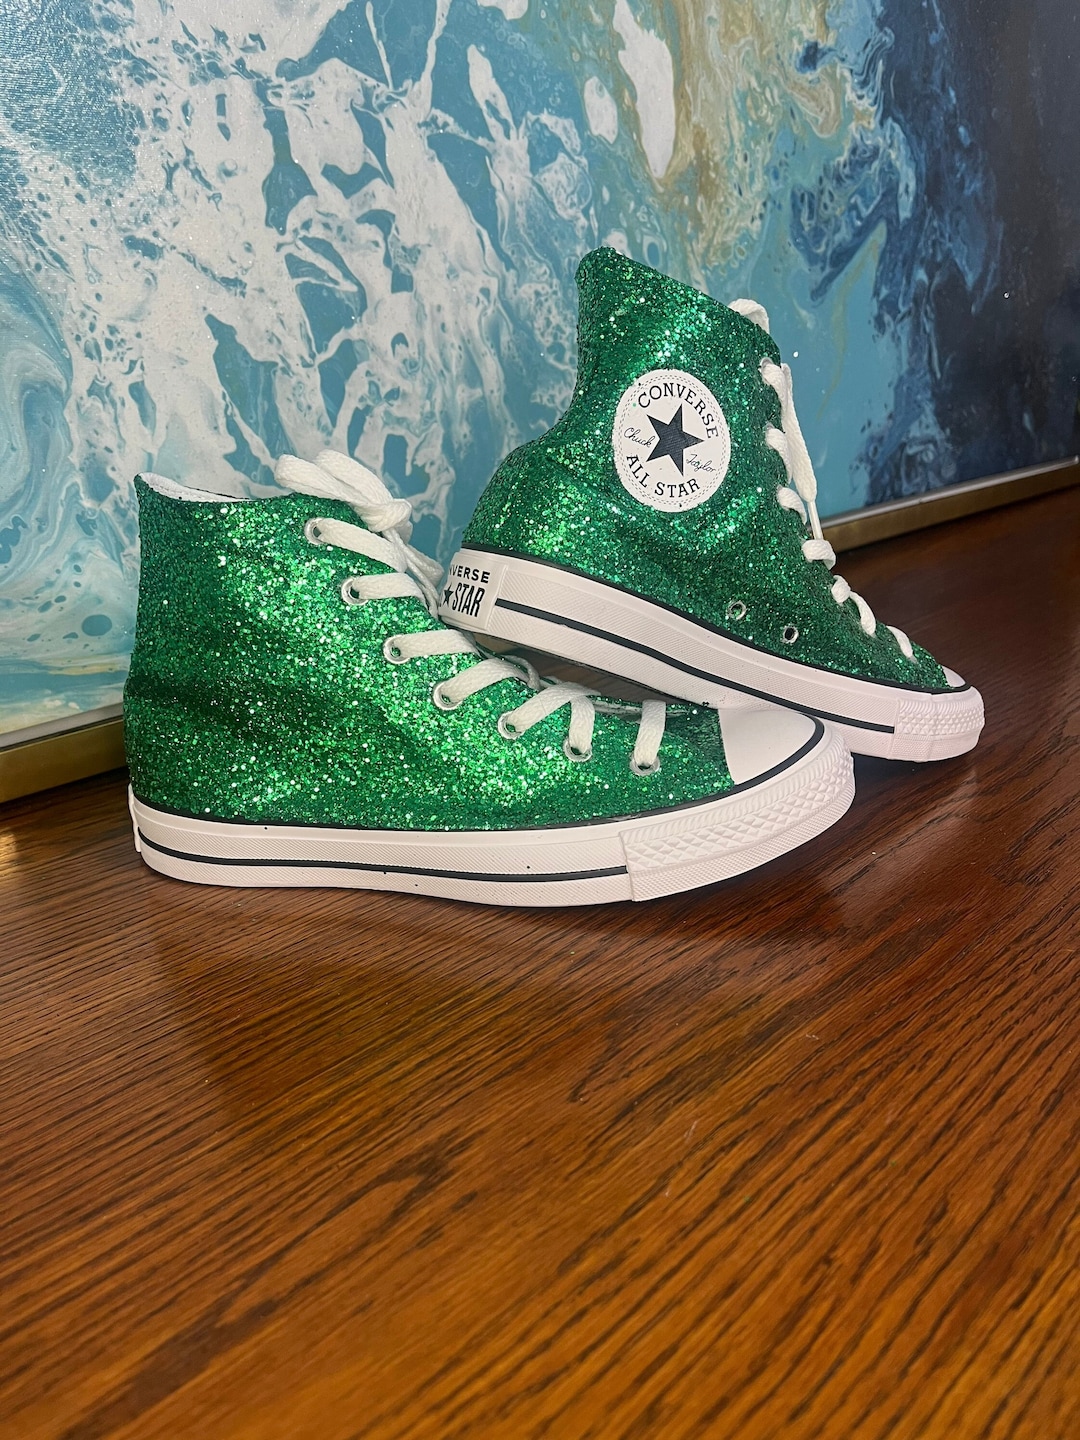 Authentic Converse All Stars in Green Glitter. Shamrock Chucks